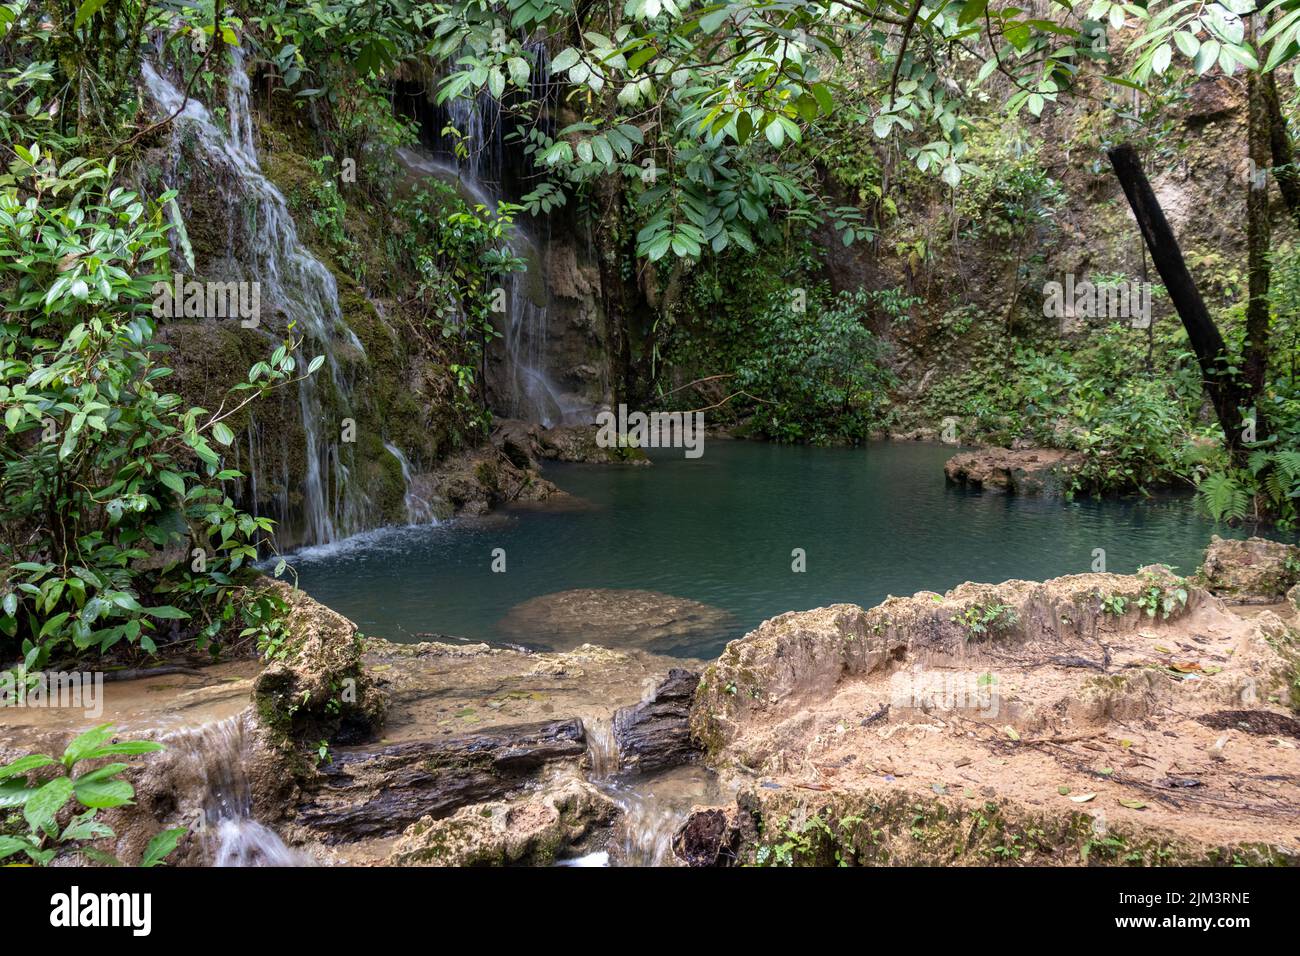 Waterfall at laguna brava in huehuetenango guatemala with little green pond. Stock Photo